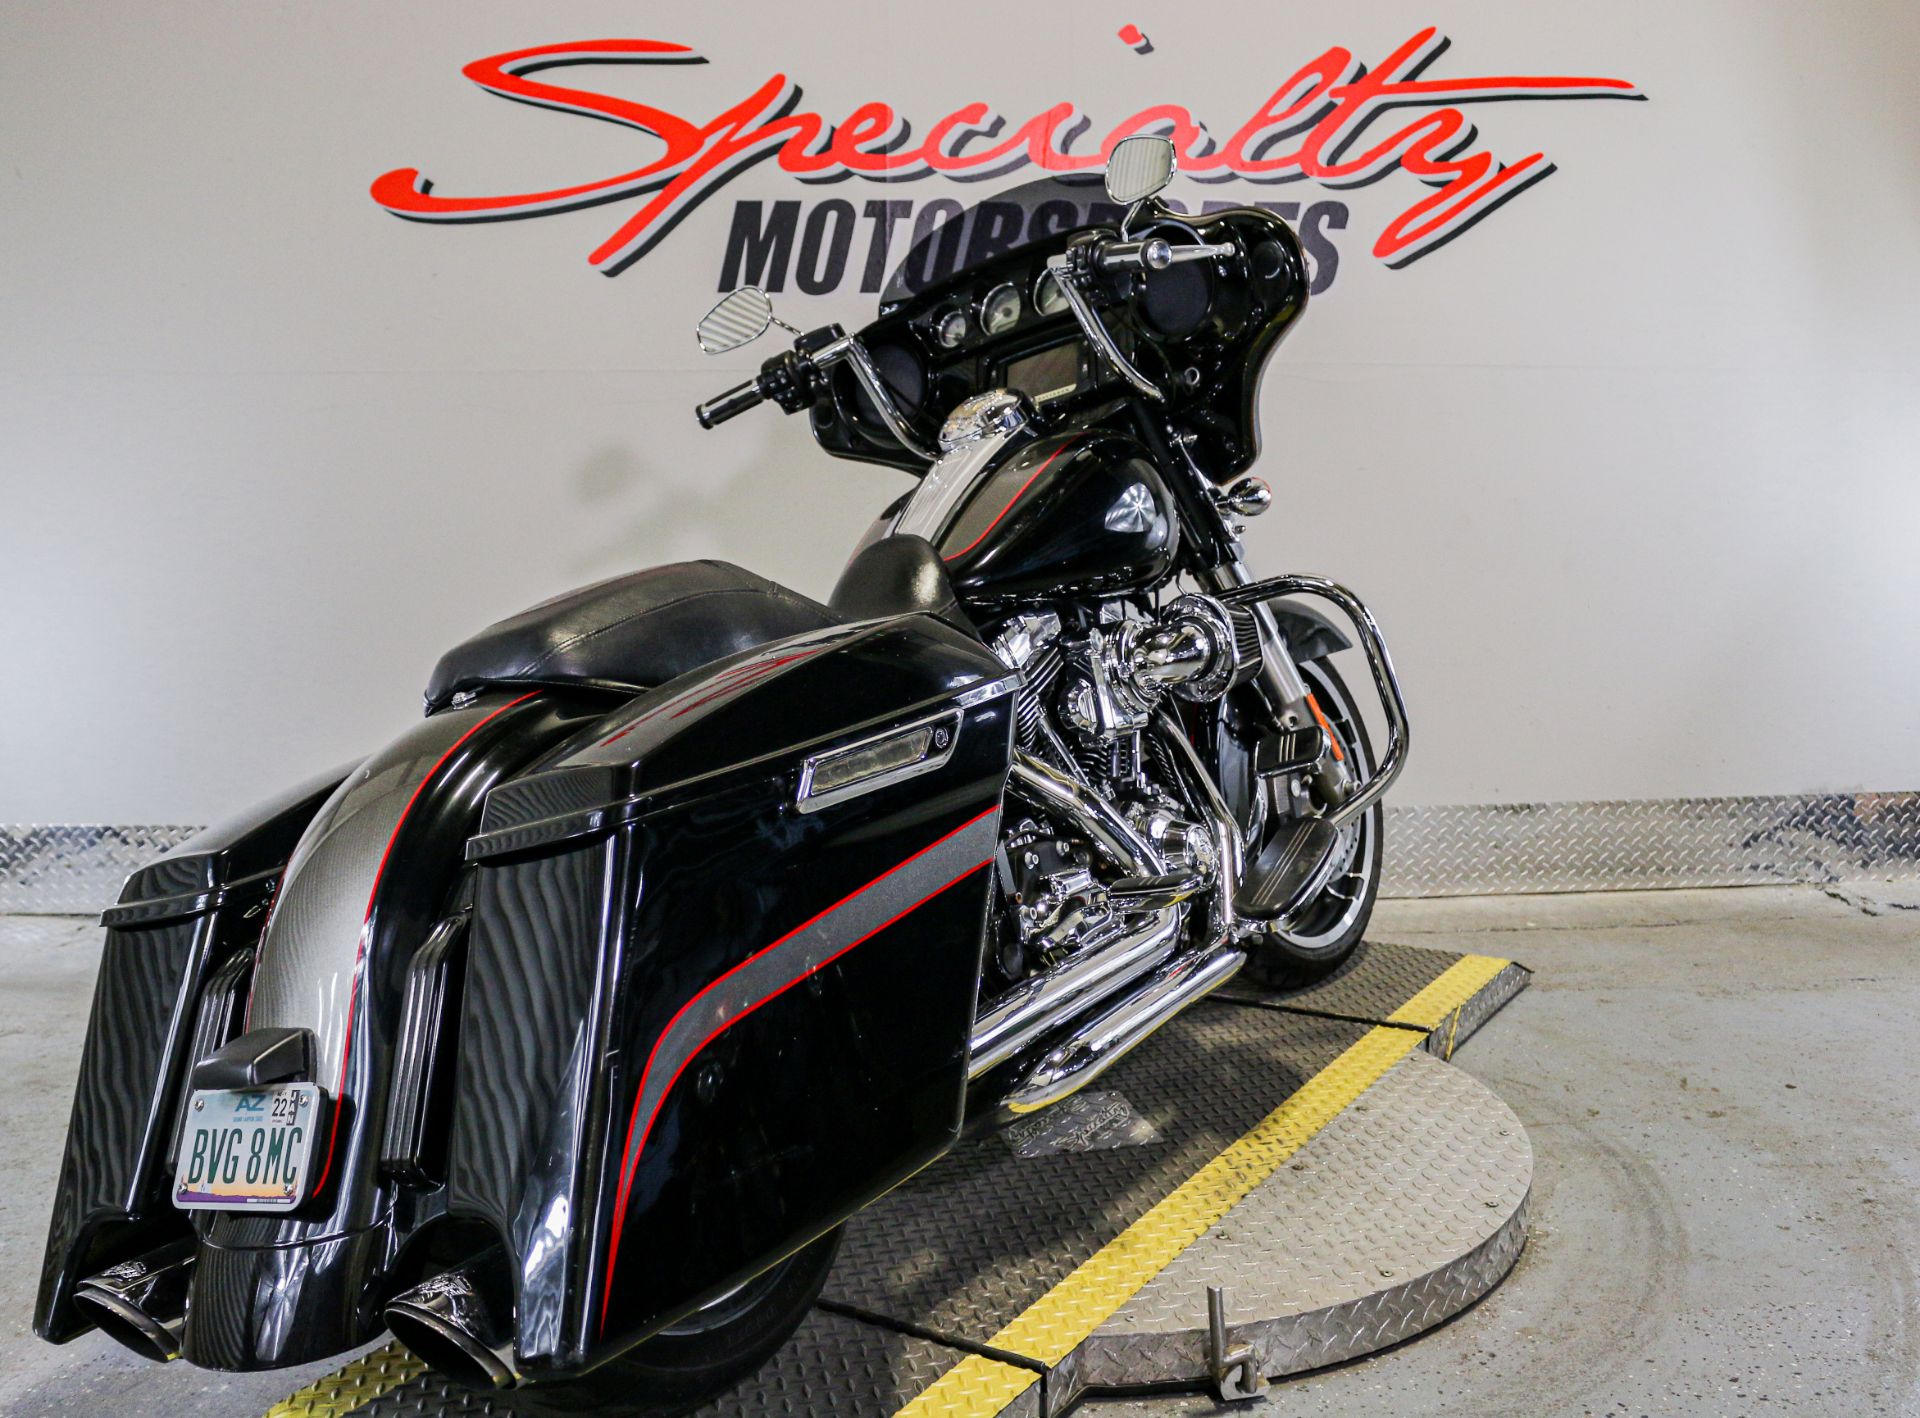 2015 Harley-Davidson Street Glide® Special in Sacramento, California - Photo 2